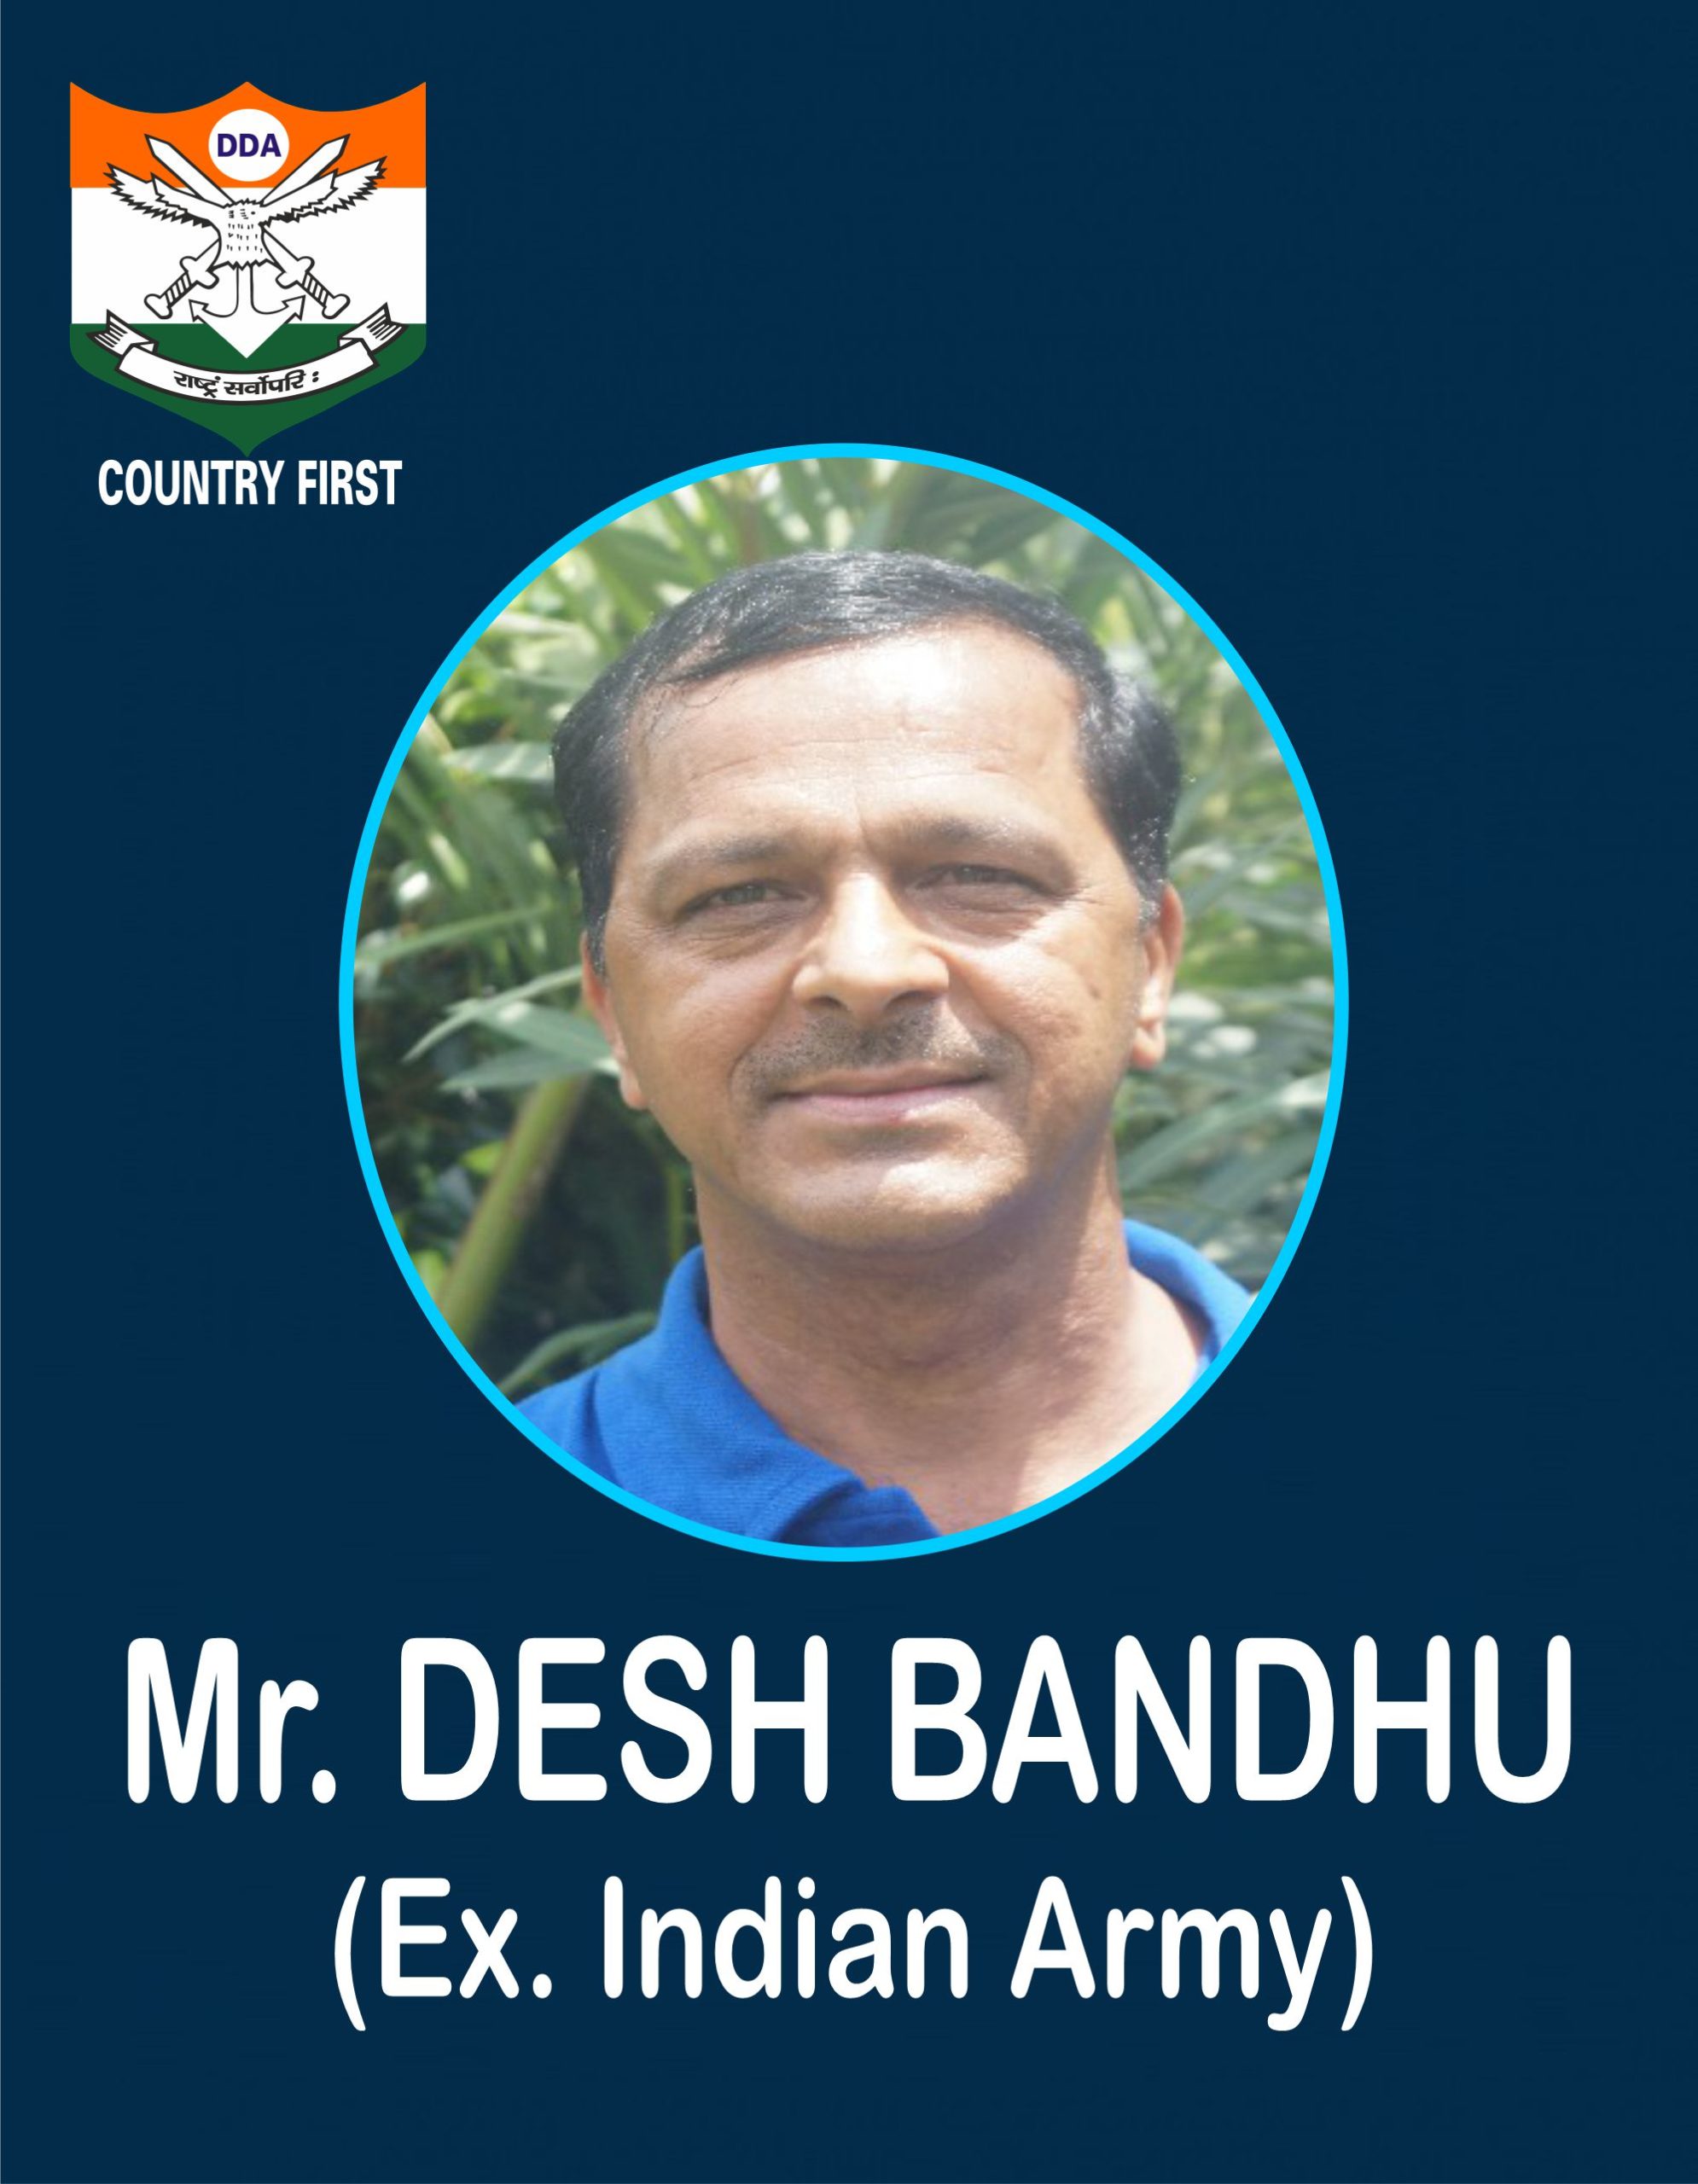 Mr. Deshbandhu Barthwal